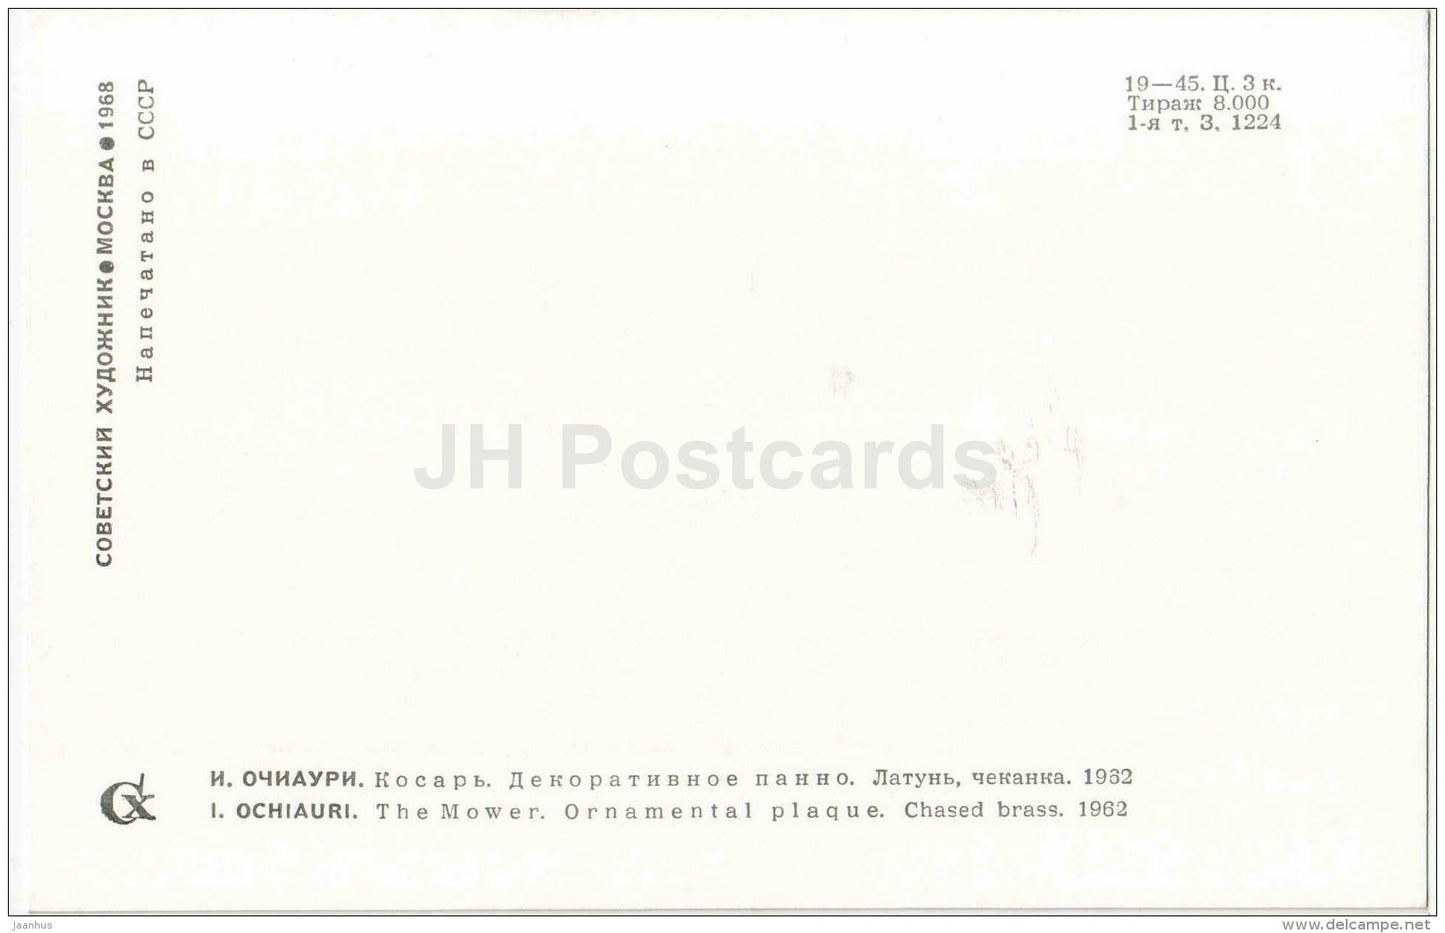 The Mower by I. Ochiauri - ornamental plaque - Stamping and Ceramics of Georgia - 1968 - Georgia USSR - unused - JH Postcards